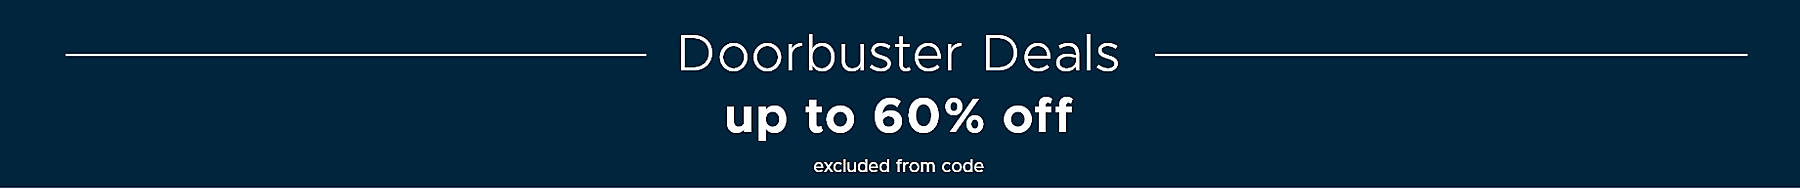 Doorbuster Deals up to 60% off excluded from code